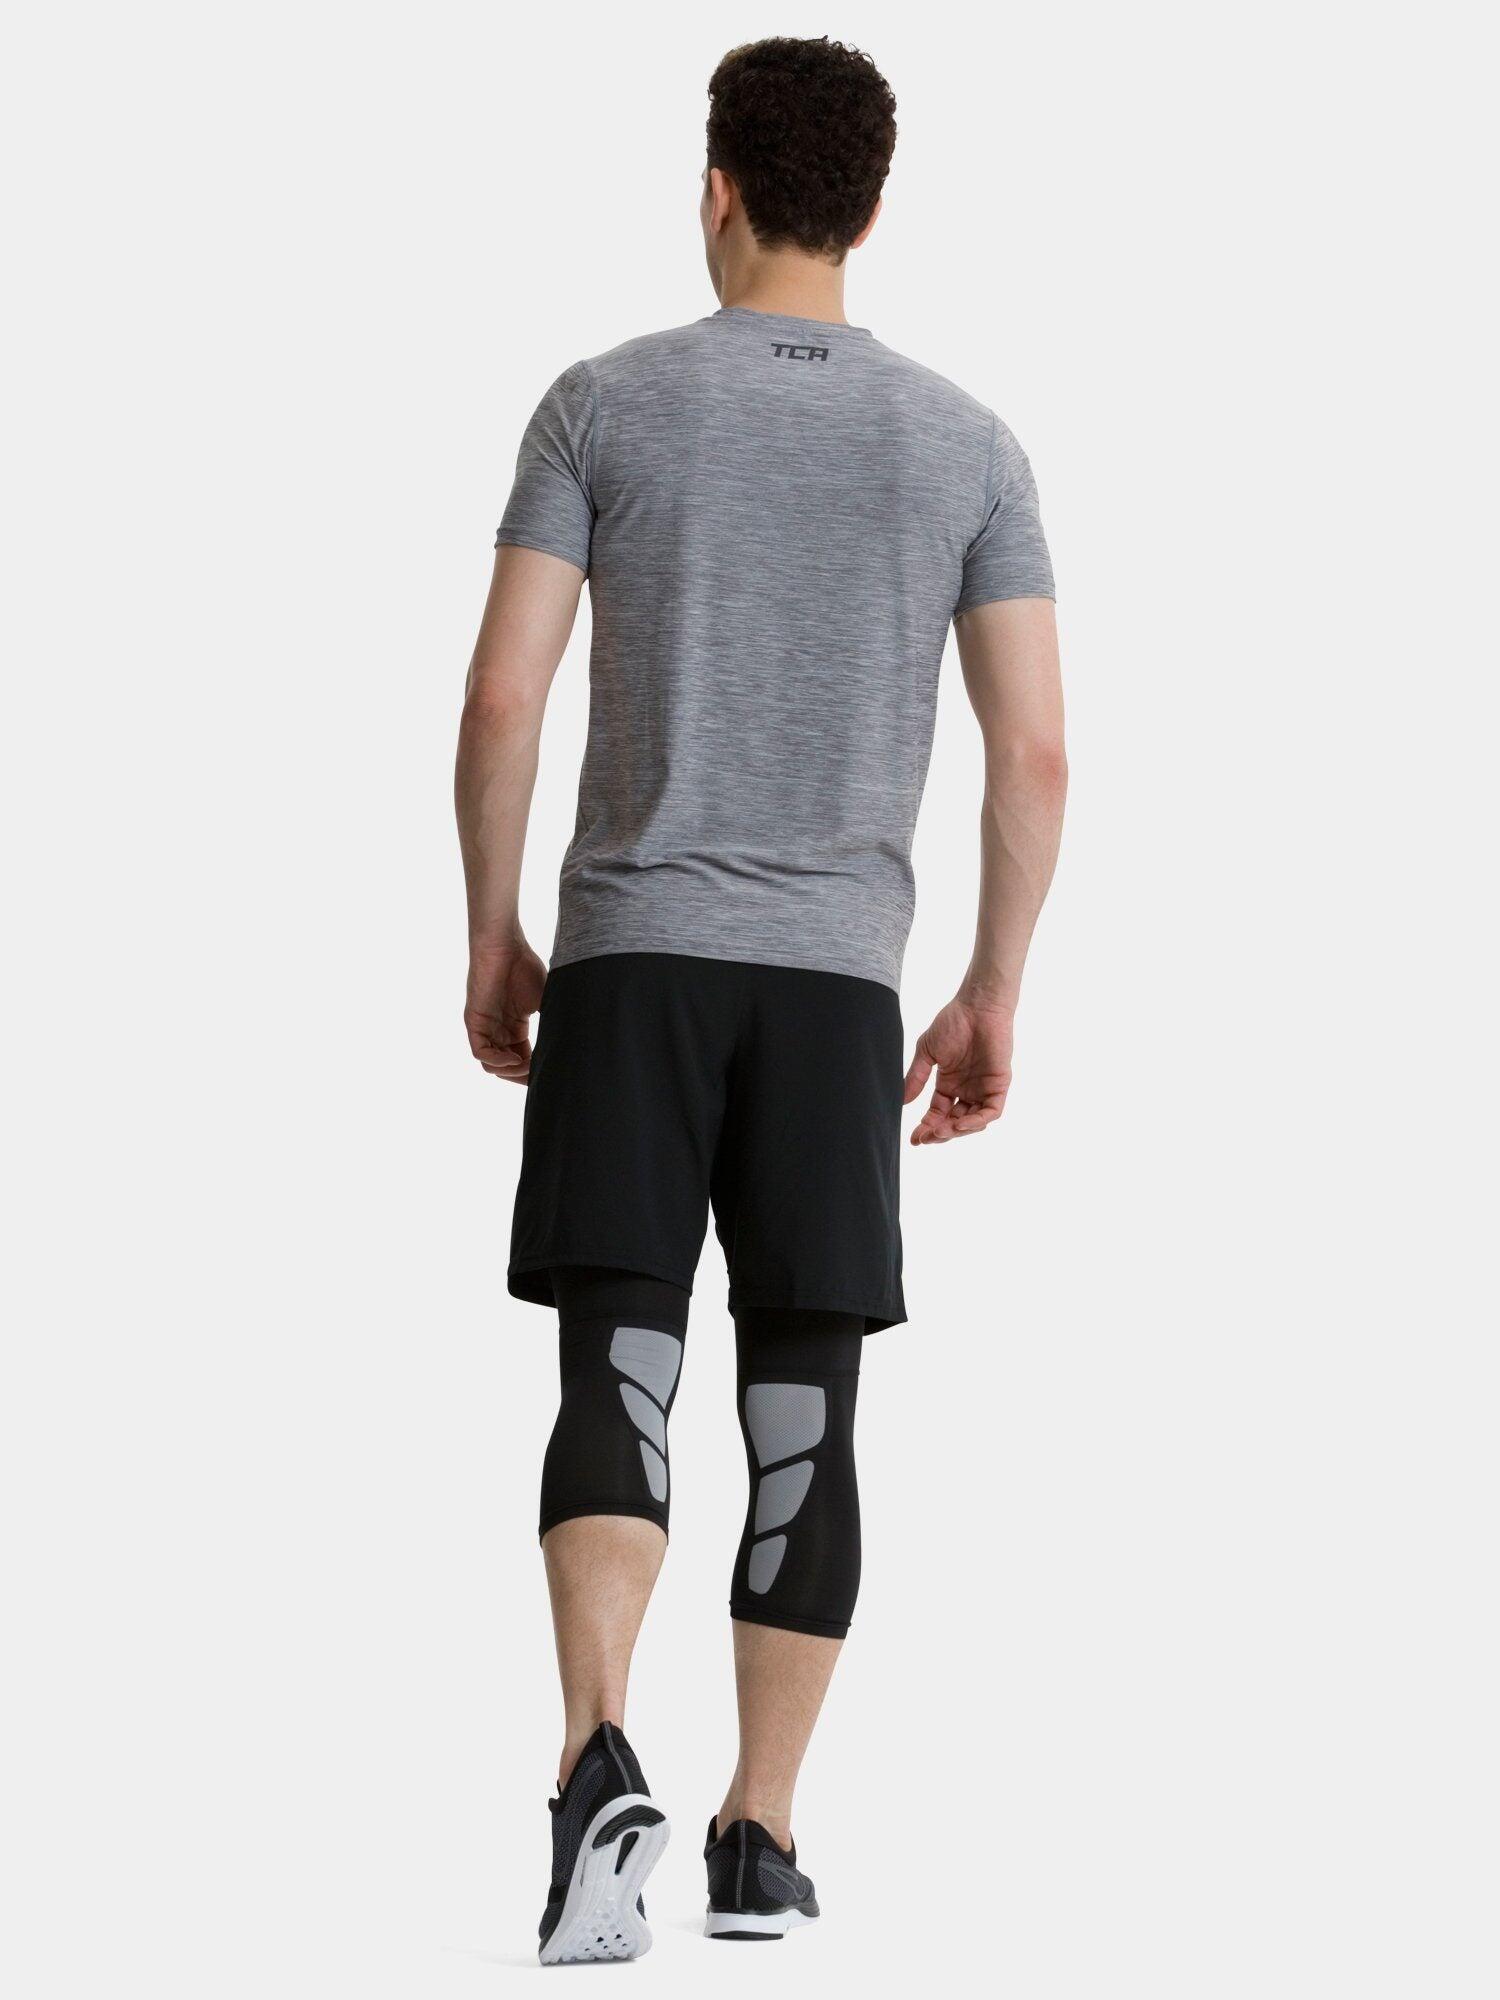 Men’s Galaxy 4D-Stretch Running Gym T-Shirt - Cool Grey 2/6